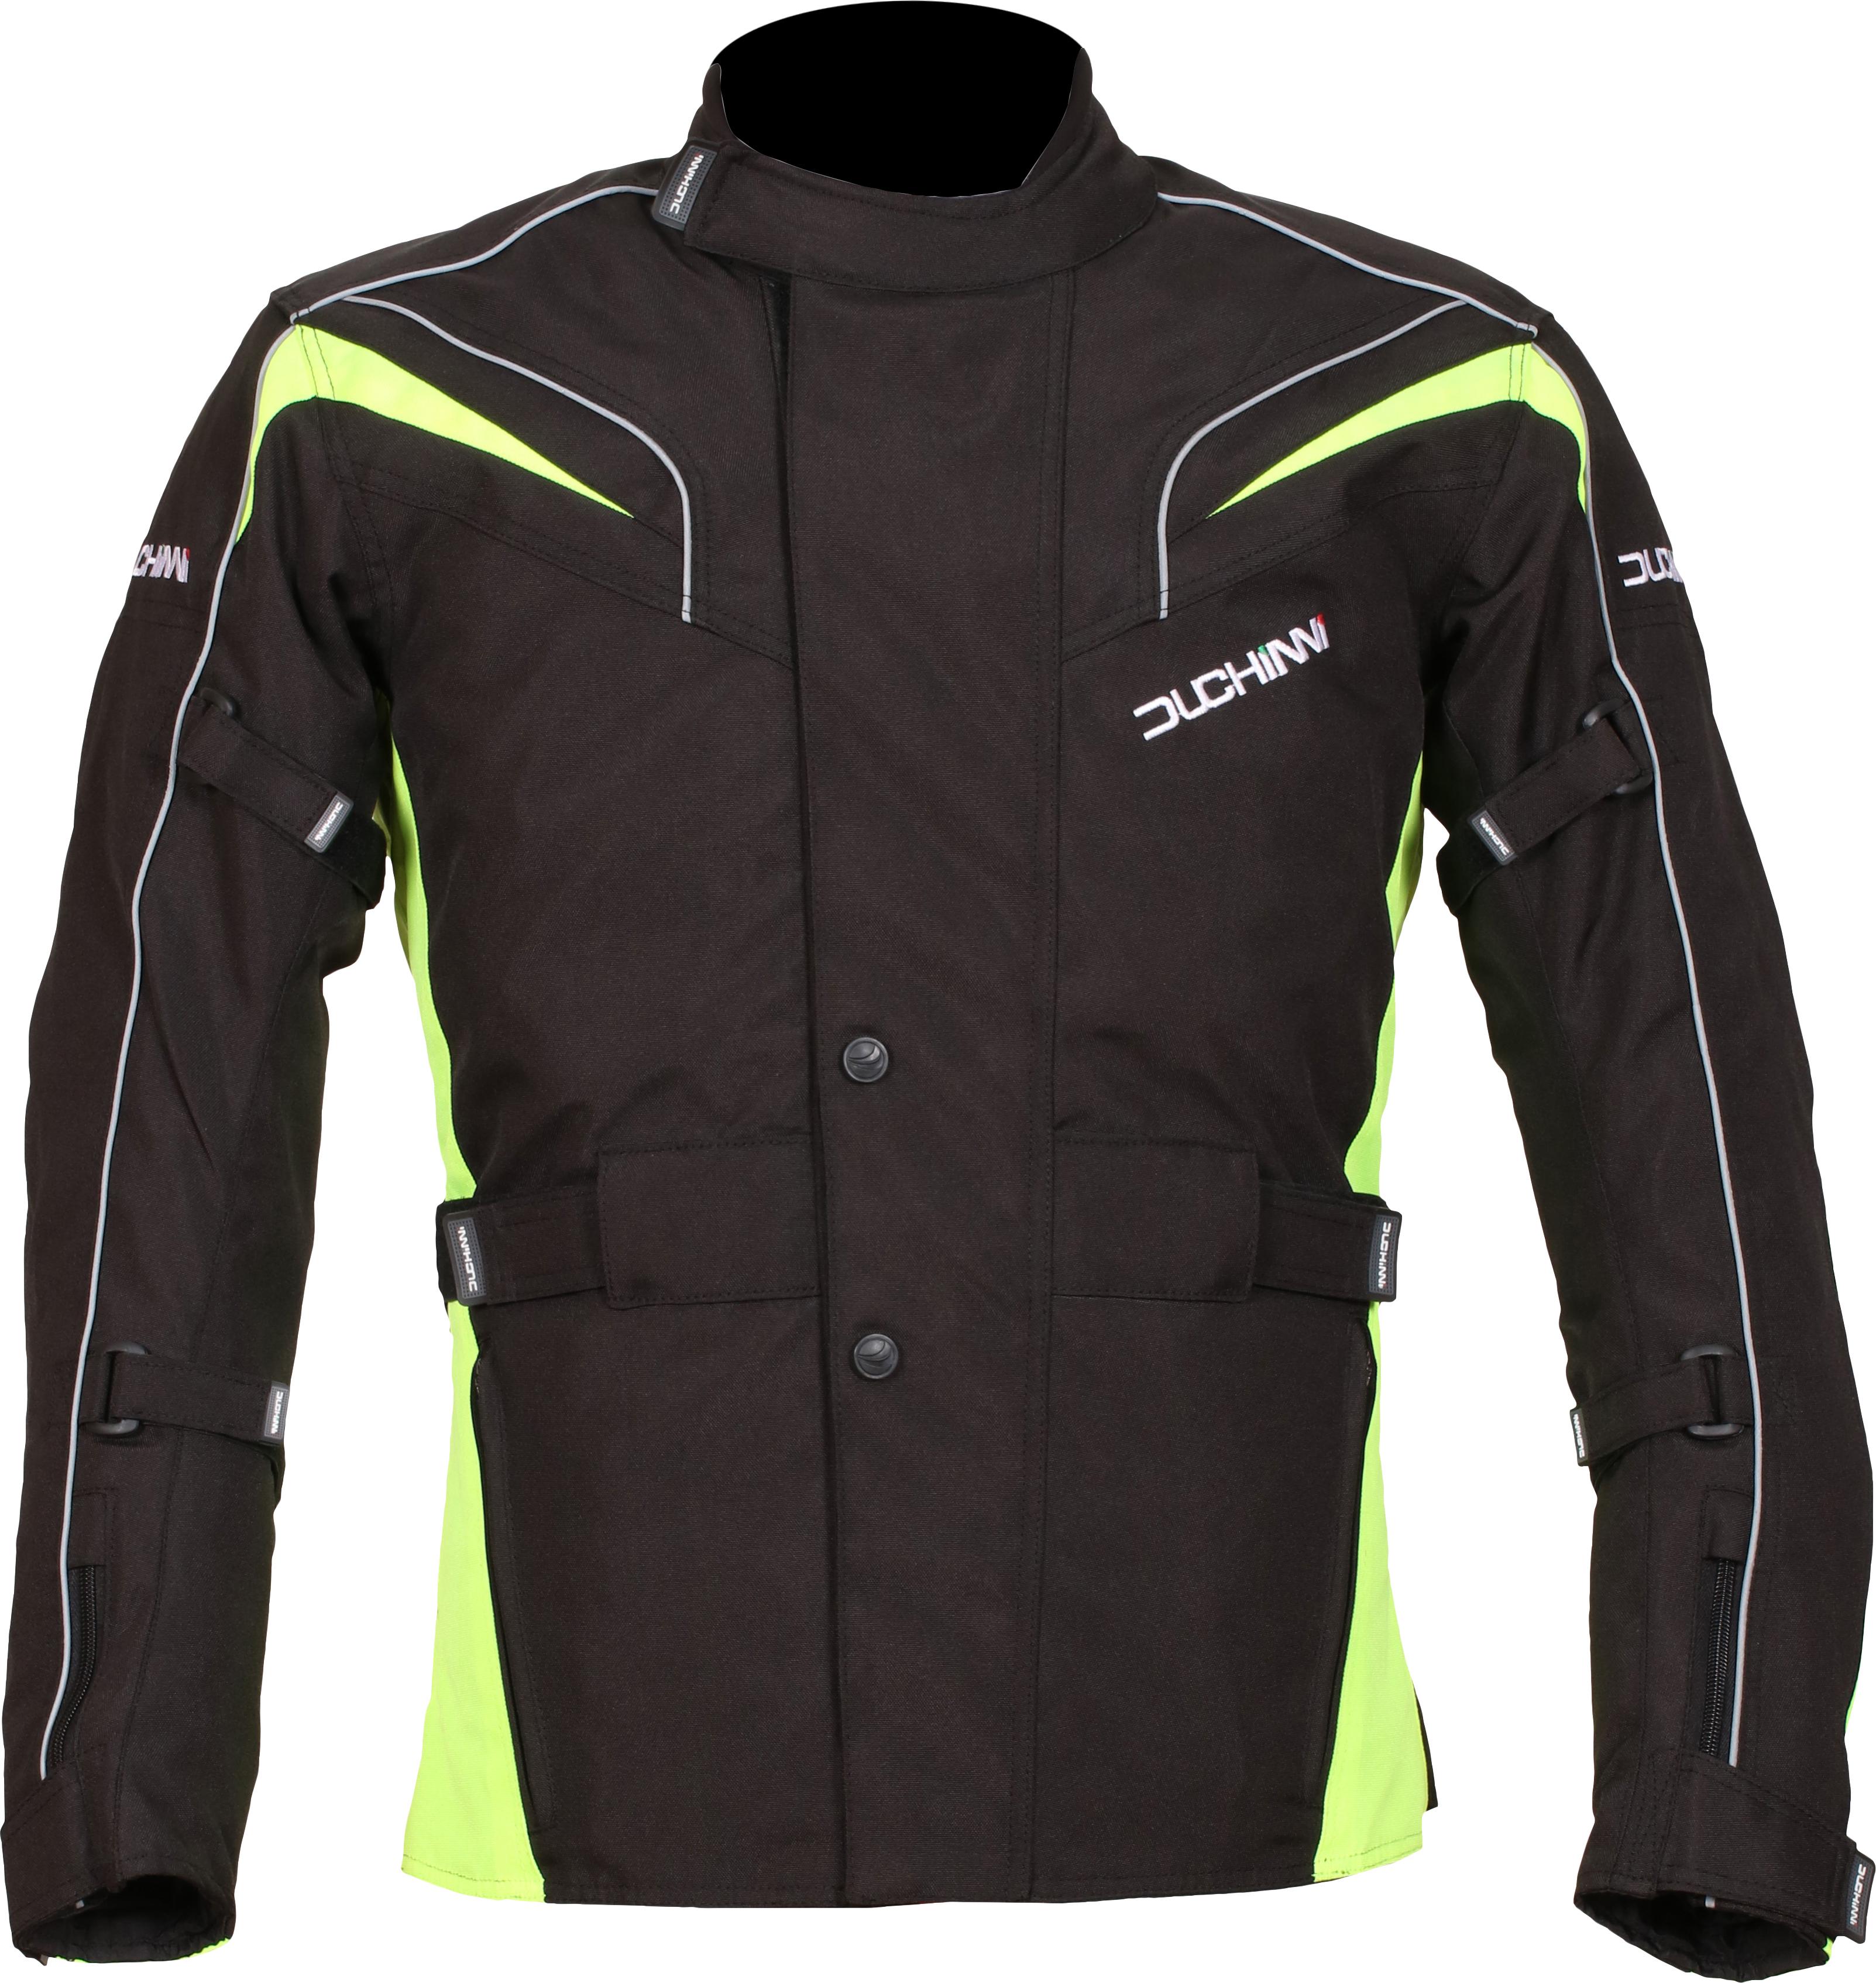 Duchinni Hurricane Motorcycle Jacket - Black And Neon, 3Xl